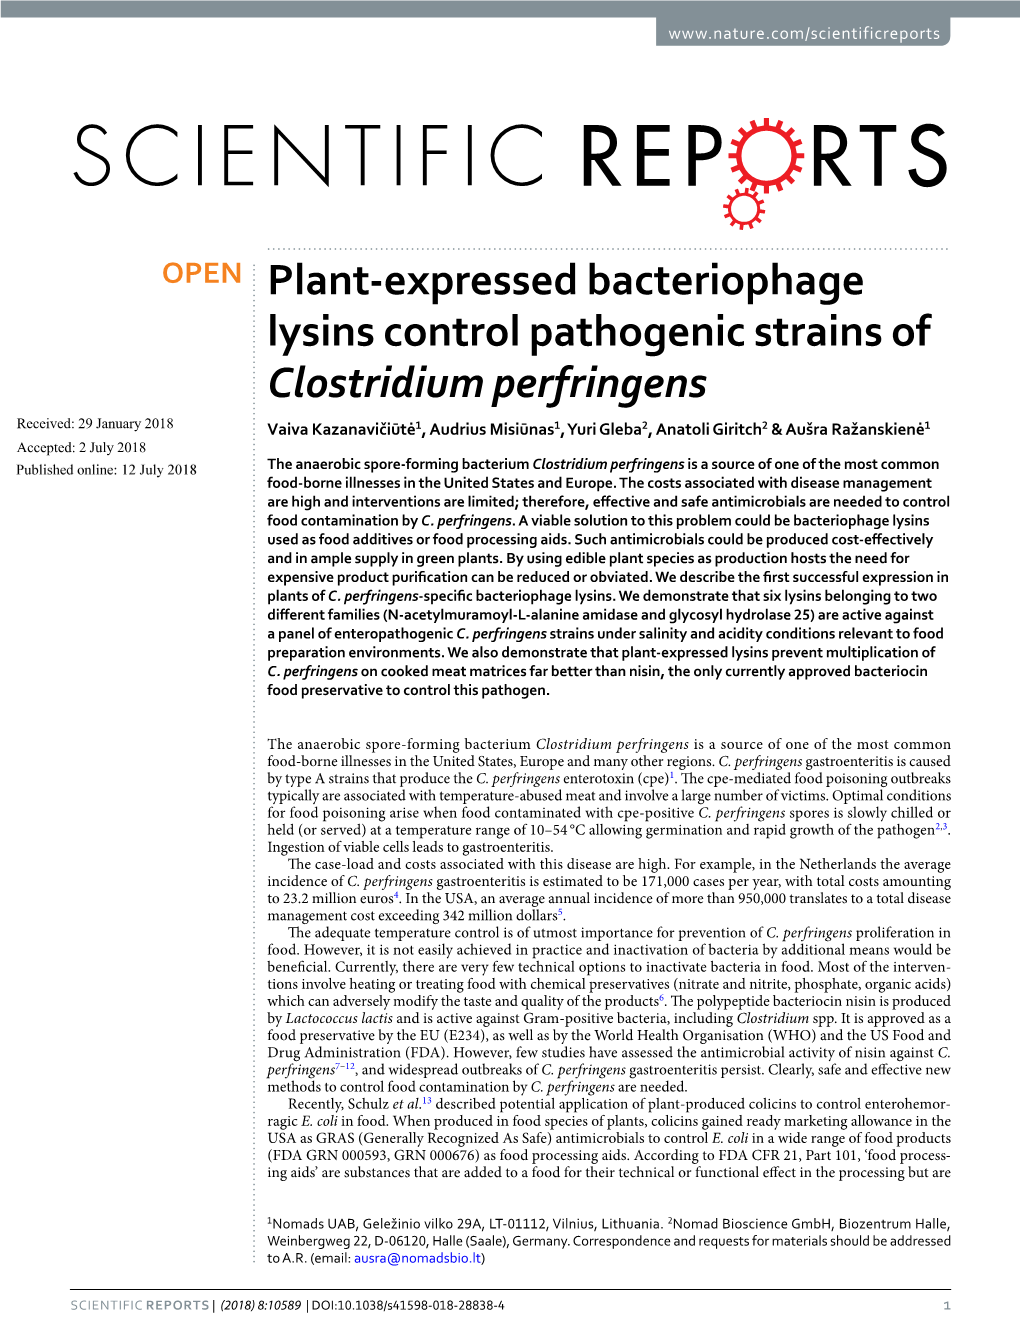 Plant-Expressed Bacteriophage Lysins Control Pathogenic Strains of Clostridium Perfringens